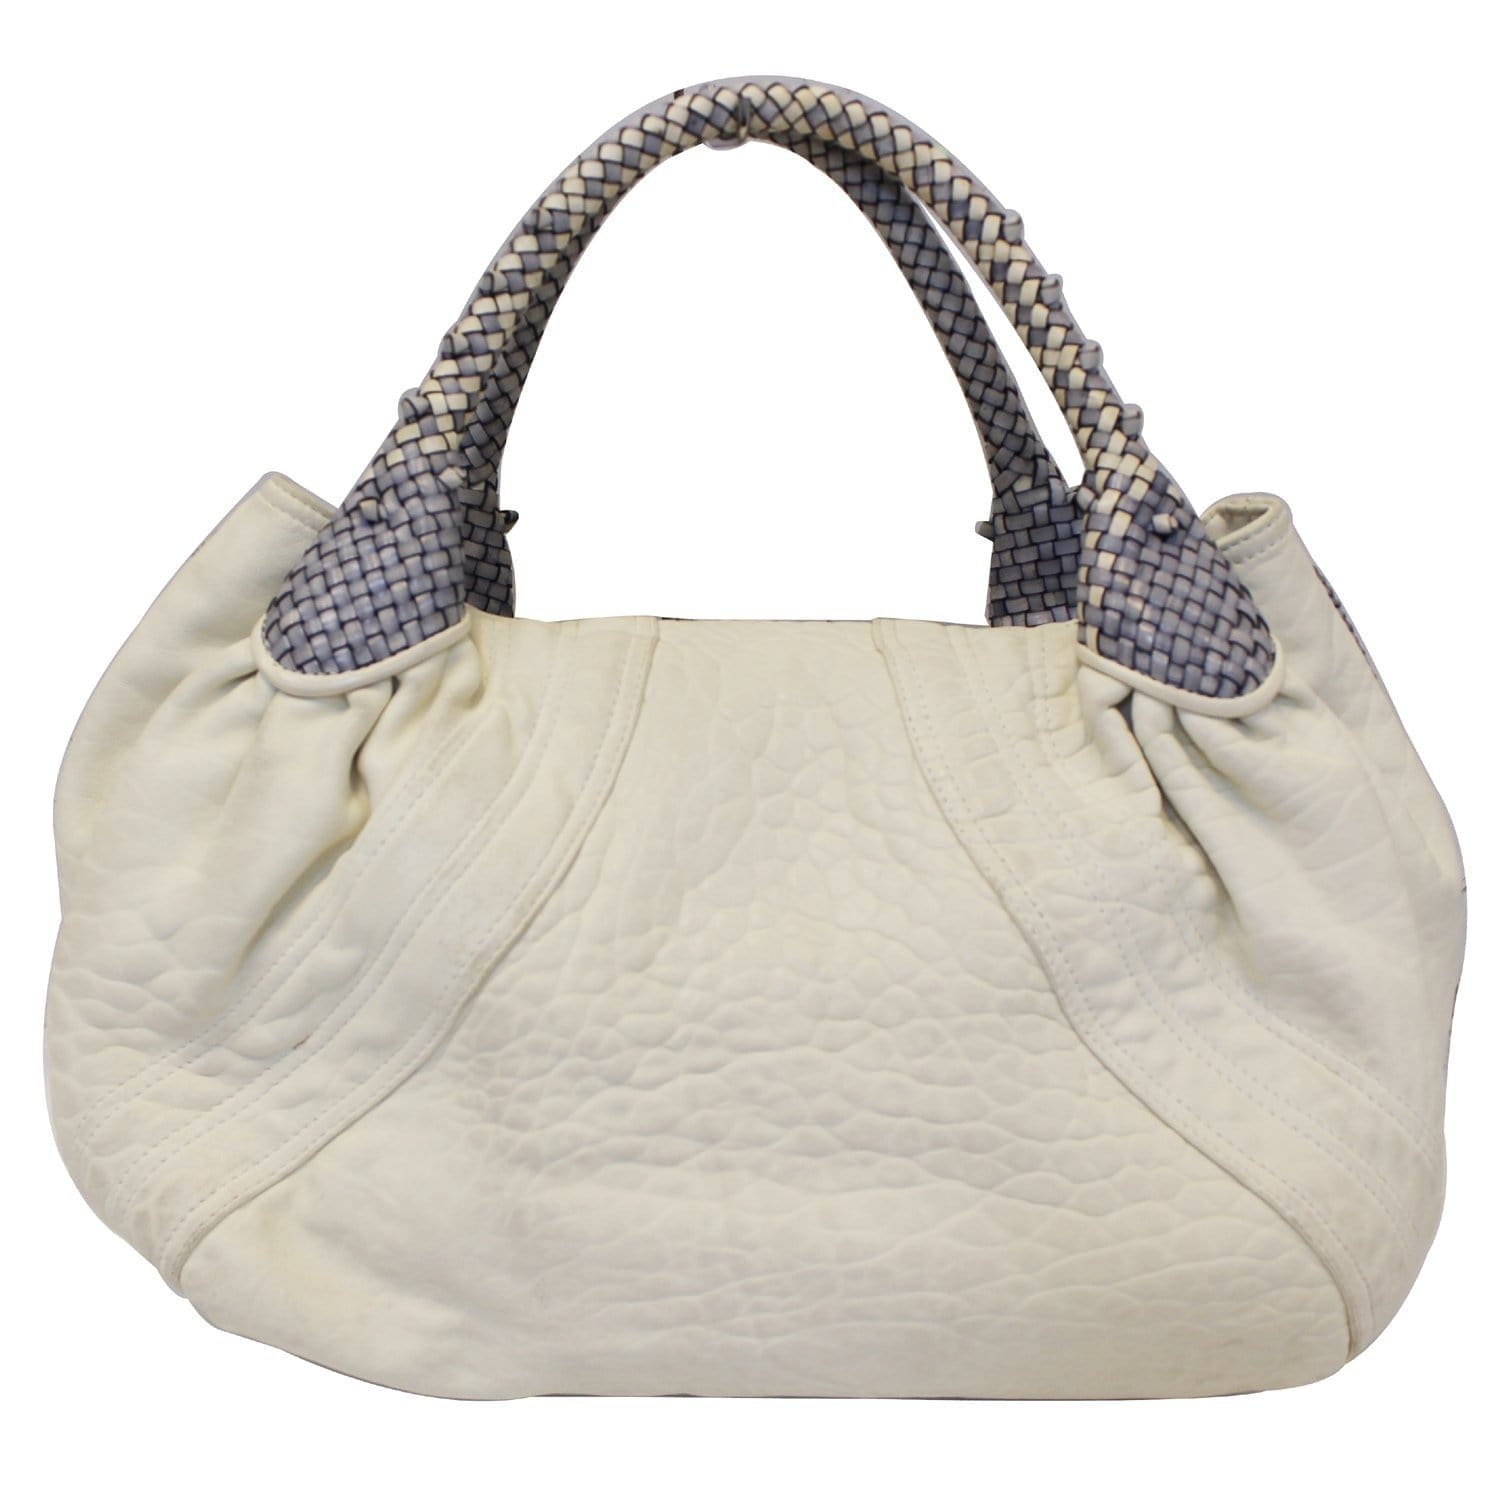 FENDI Spy Nappa Leather Satchel Bag White